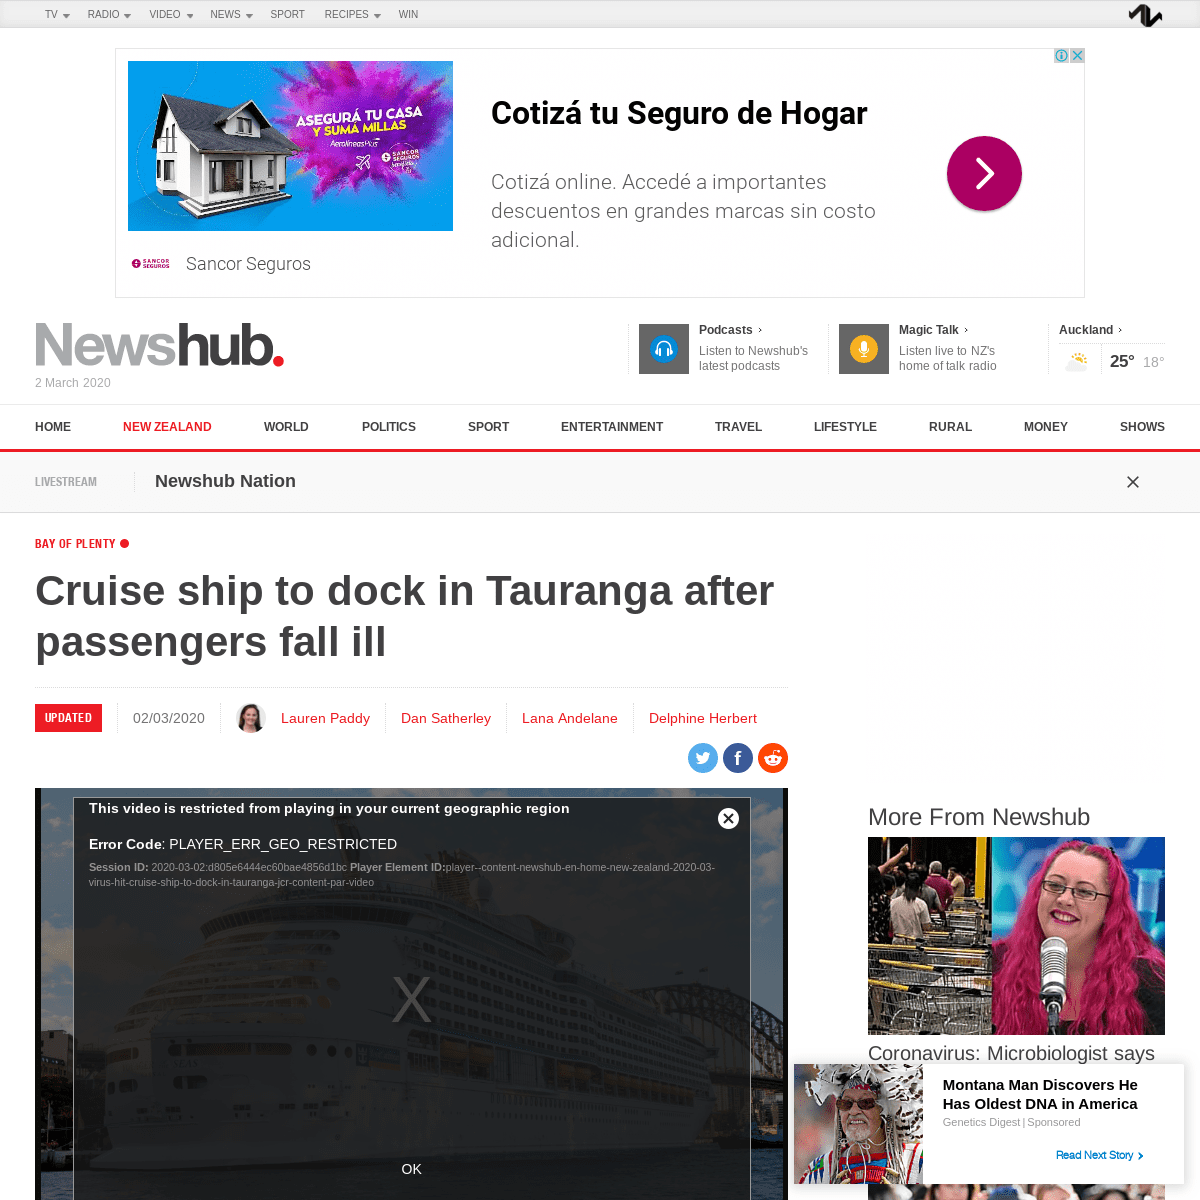 A complete backup of www.newshub.co.nz/home/new-zealand/2020/03/virus-hit-cruise-ship-to-dock-in-tauranga.html